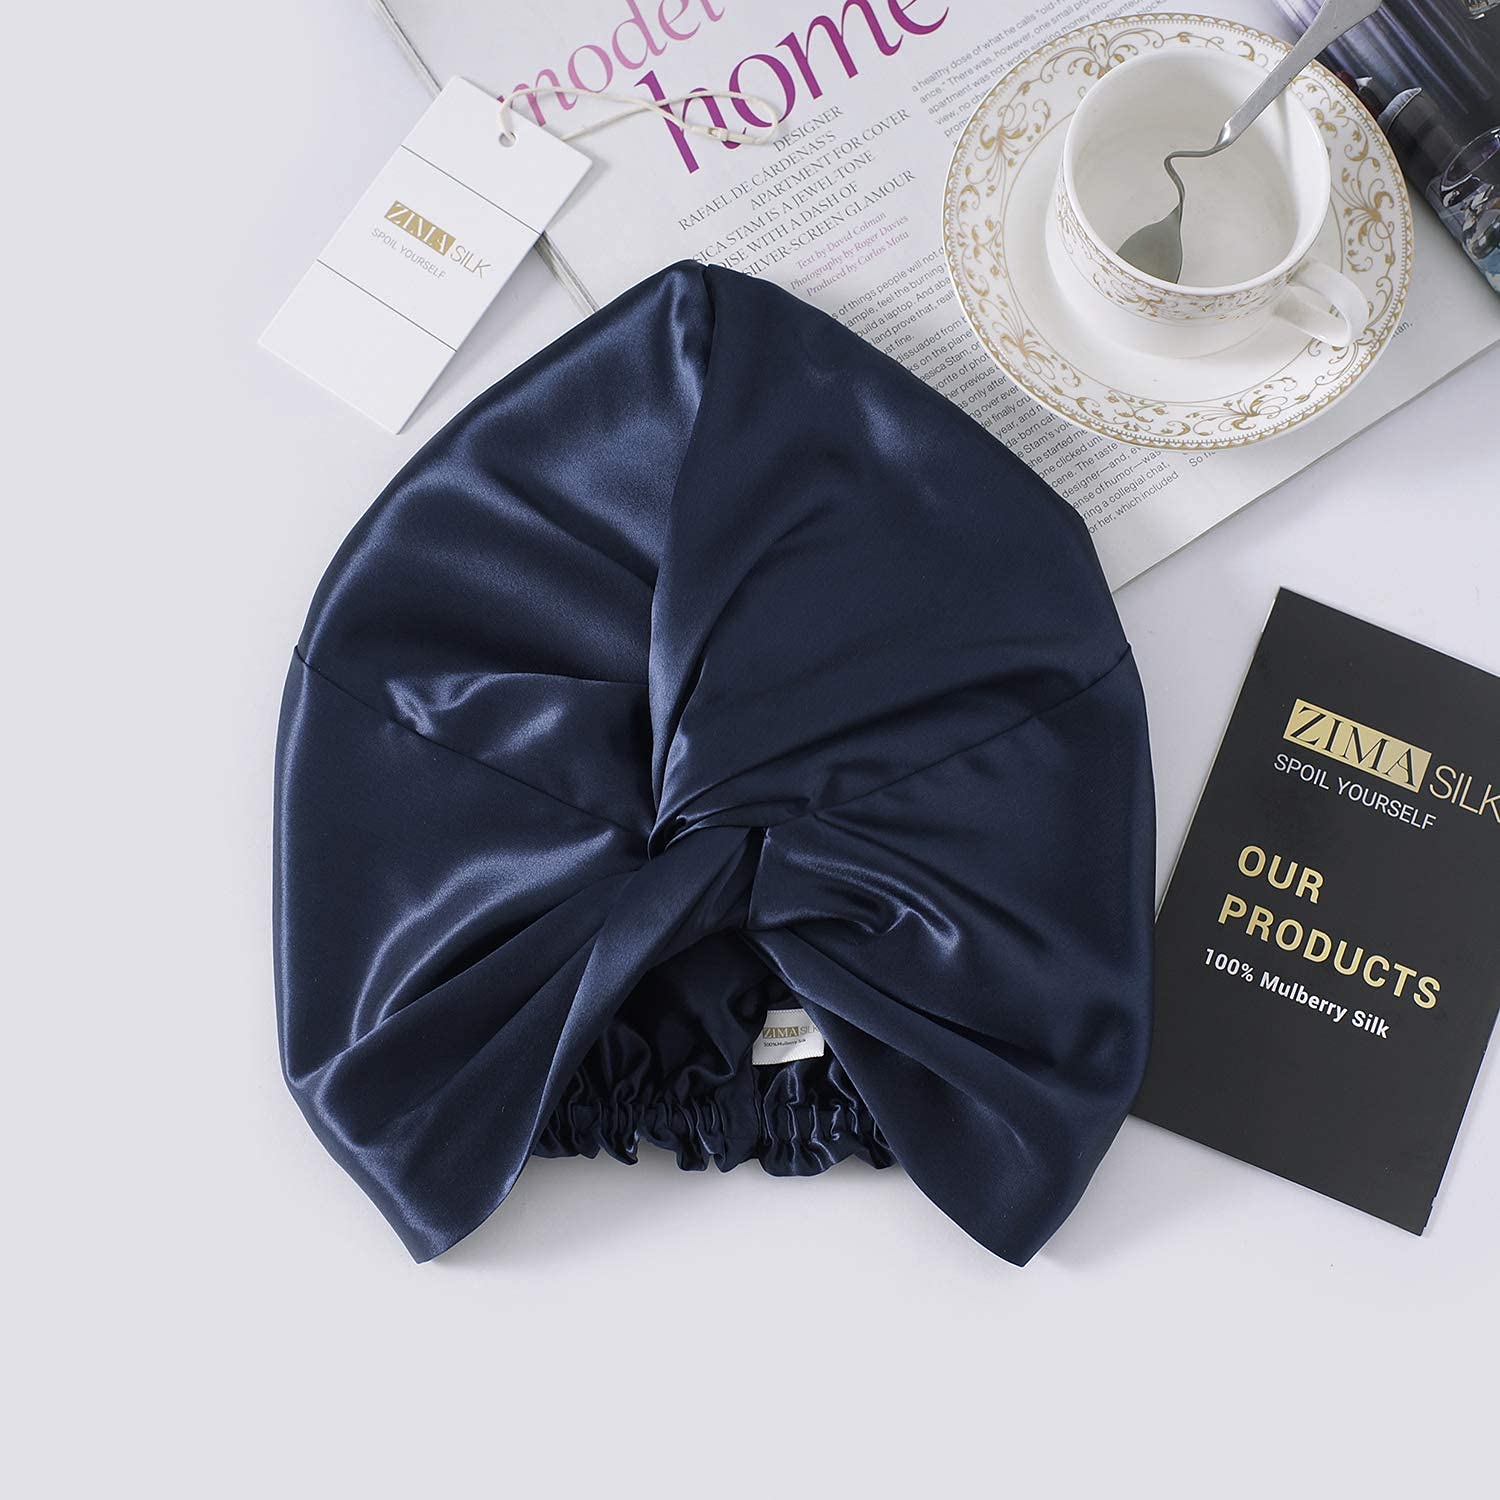 ZIMASILK 22 Momme 100% Mulberry Silk Bonnet for Sleeping & Women Hair Care, Highest Grade 6A Silk hair wrap for sleeping with Premium Elastic Stay On Head (1Pc, Navy Blue)